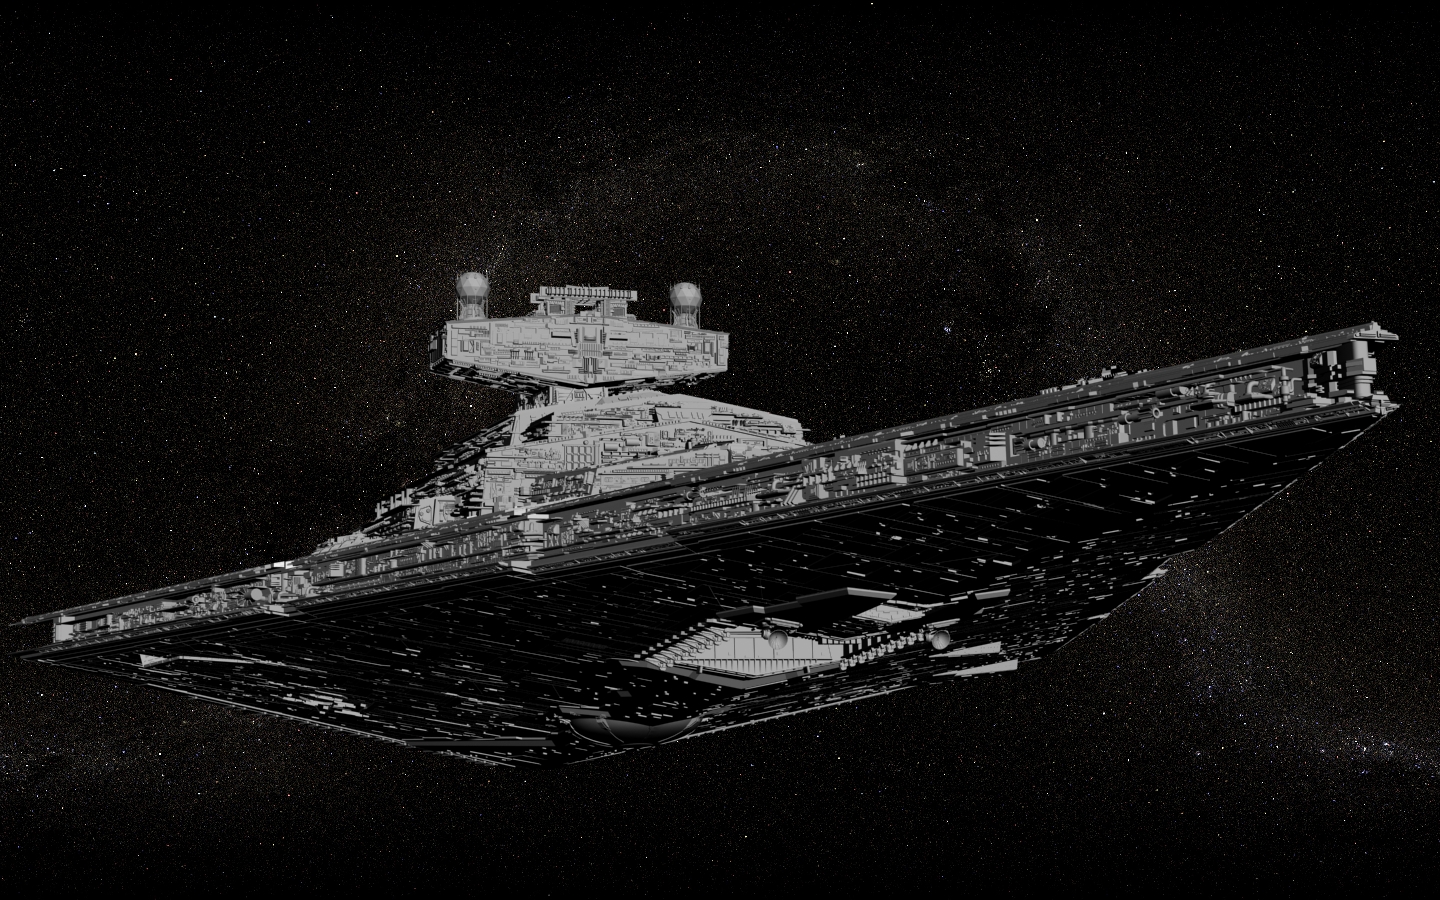 sabre class star destroyer